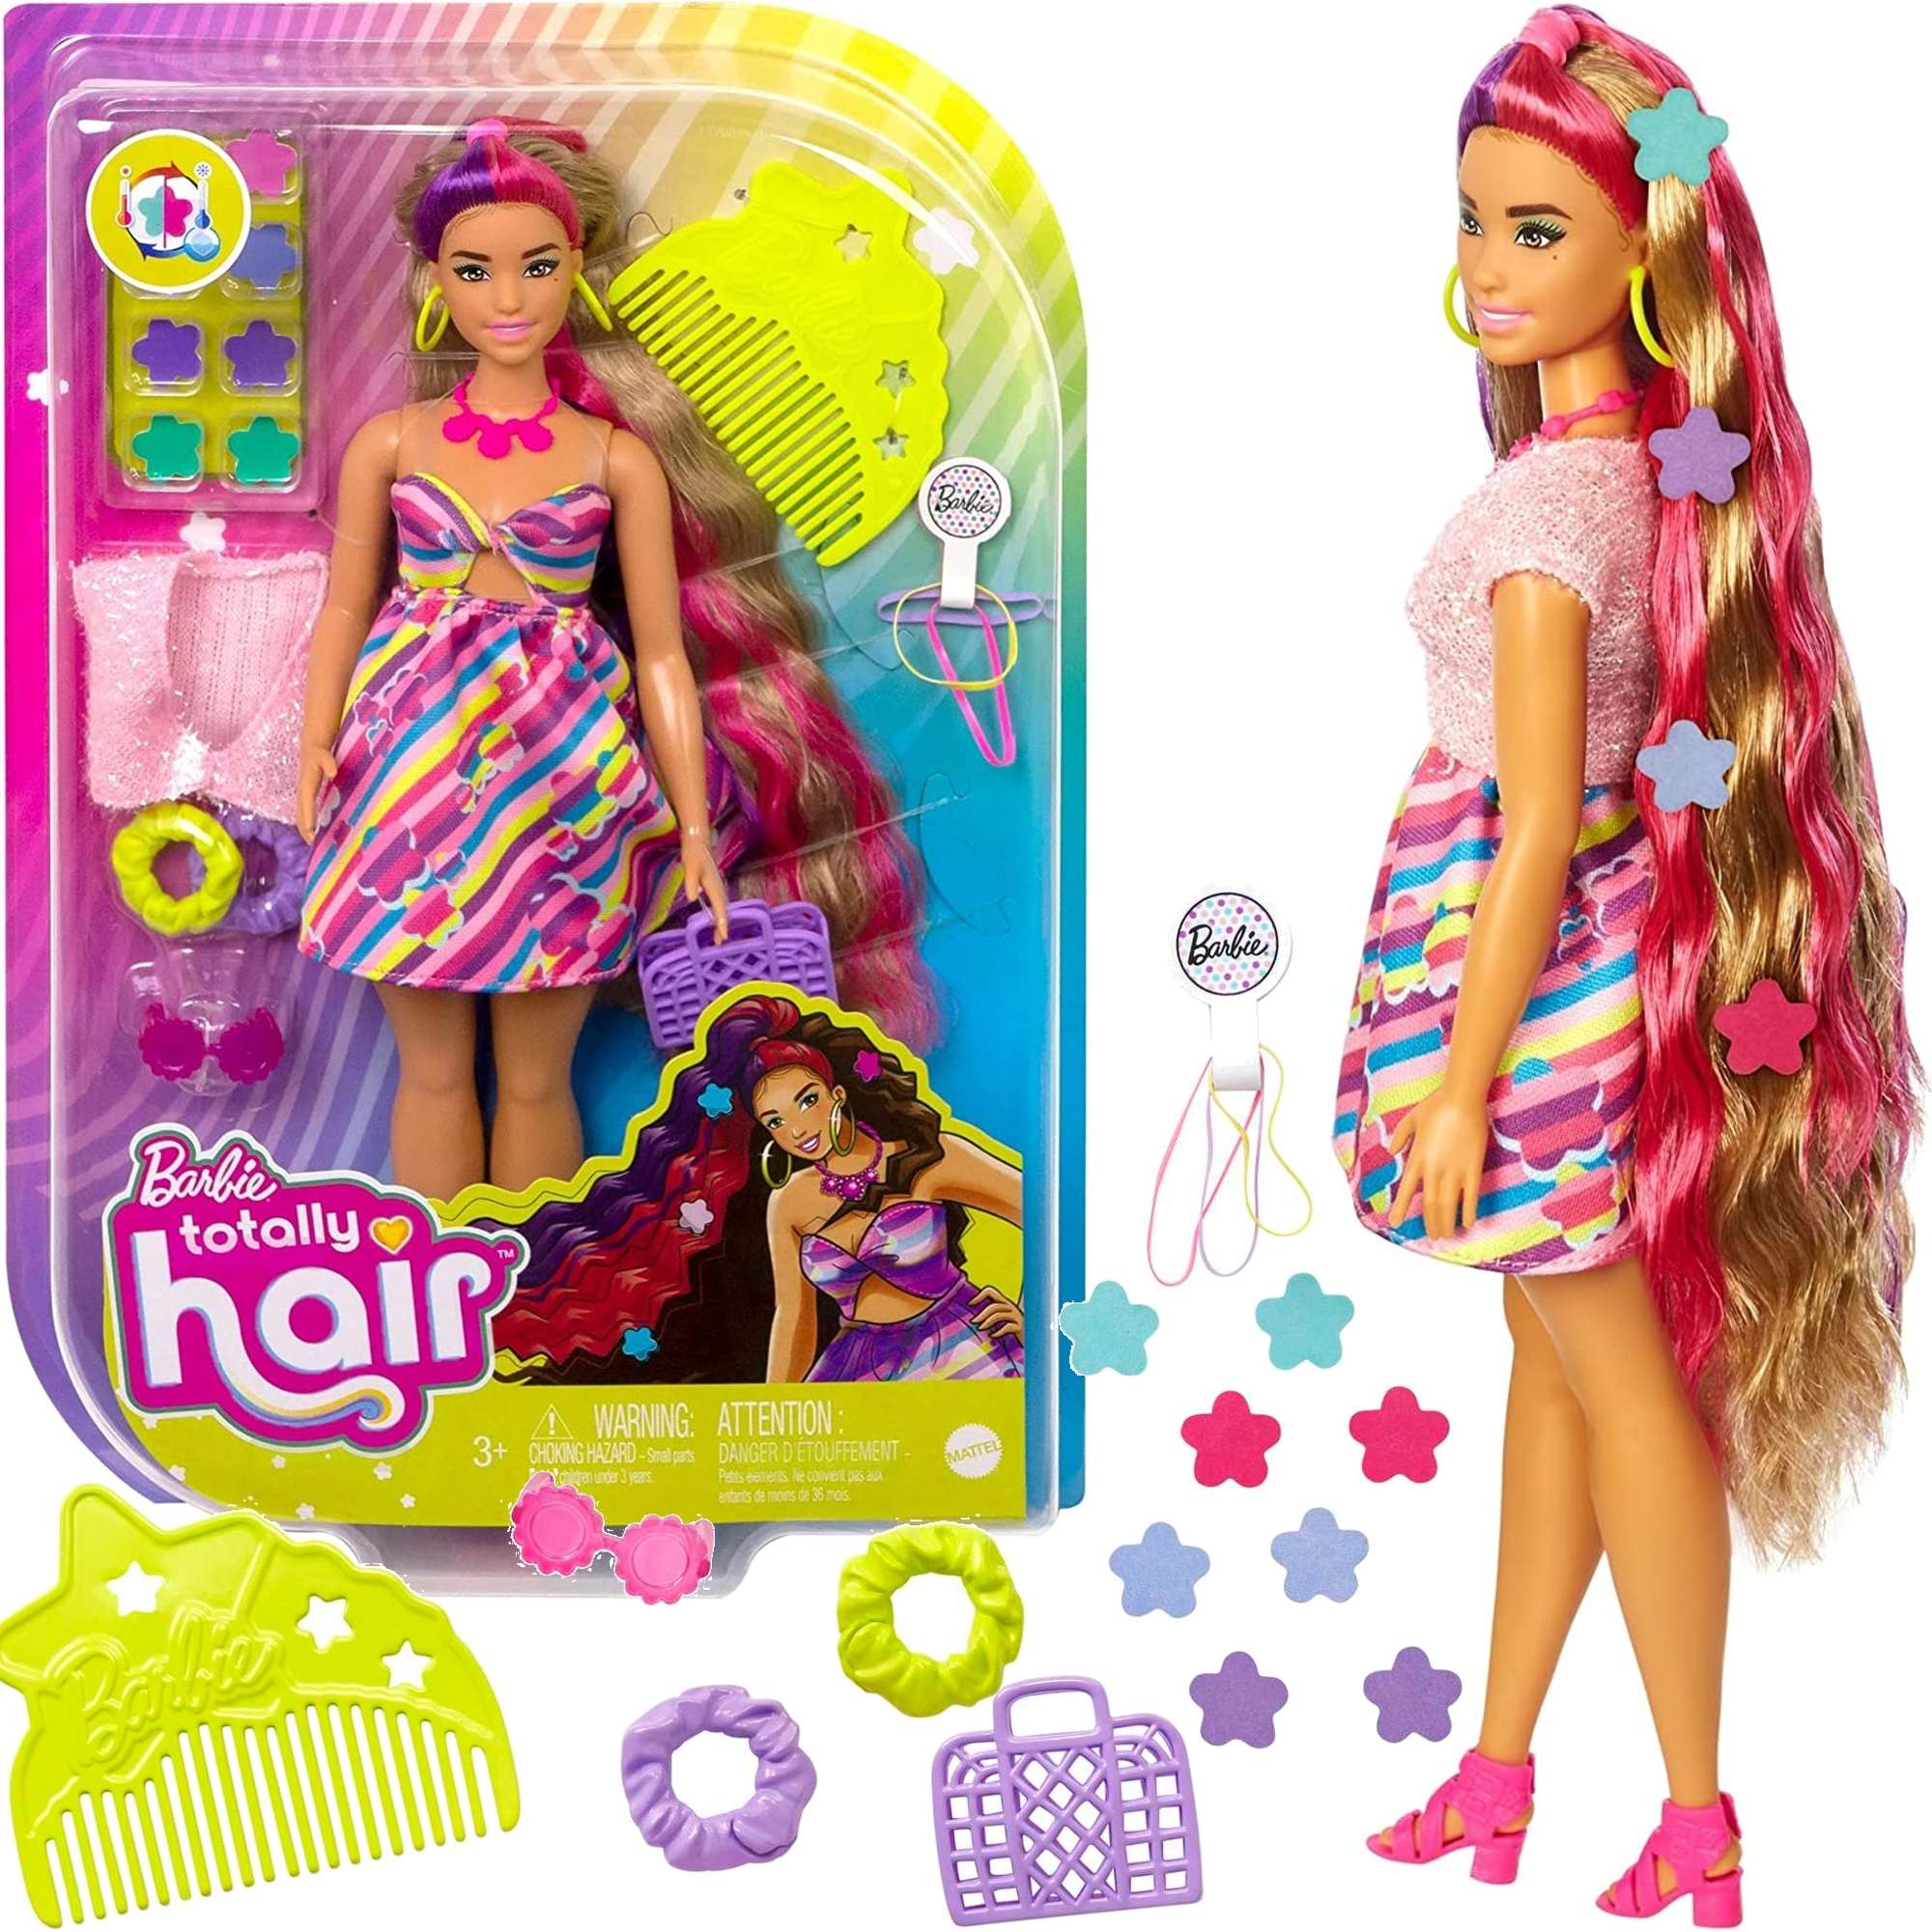 Zestaw Lalka Barbie Totally Hair #2 + akcesoria